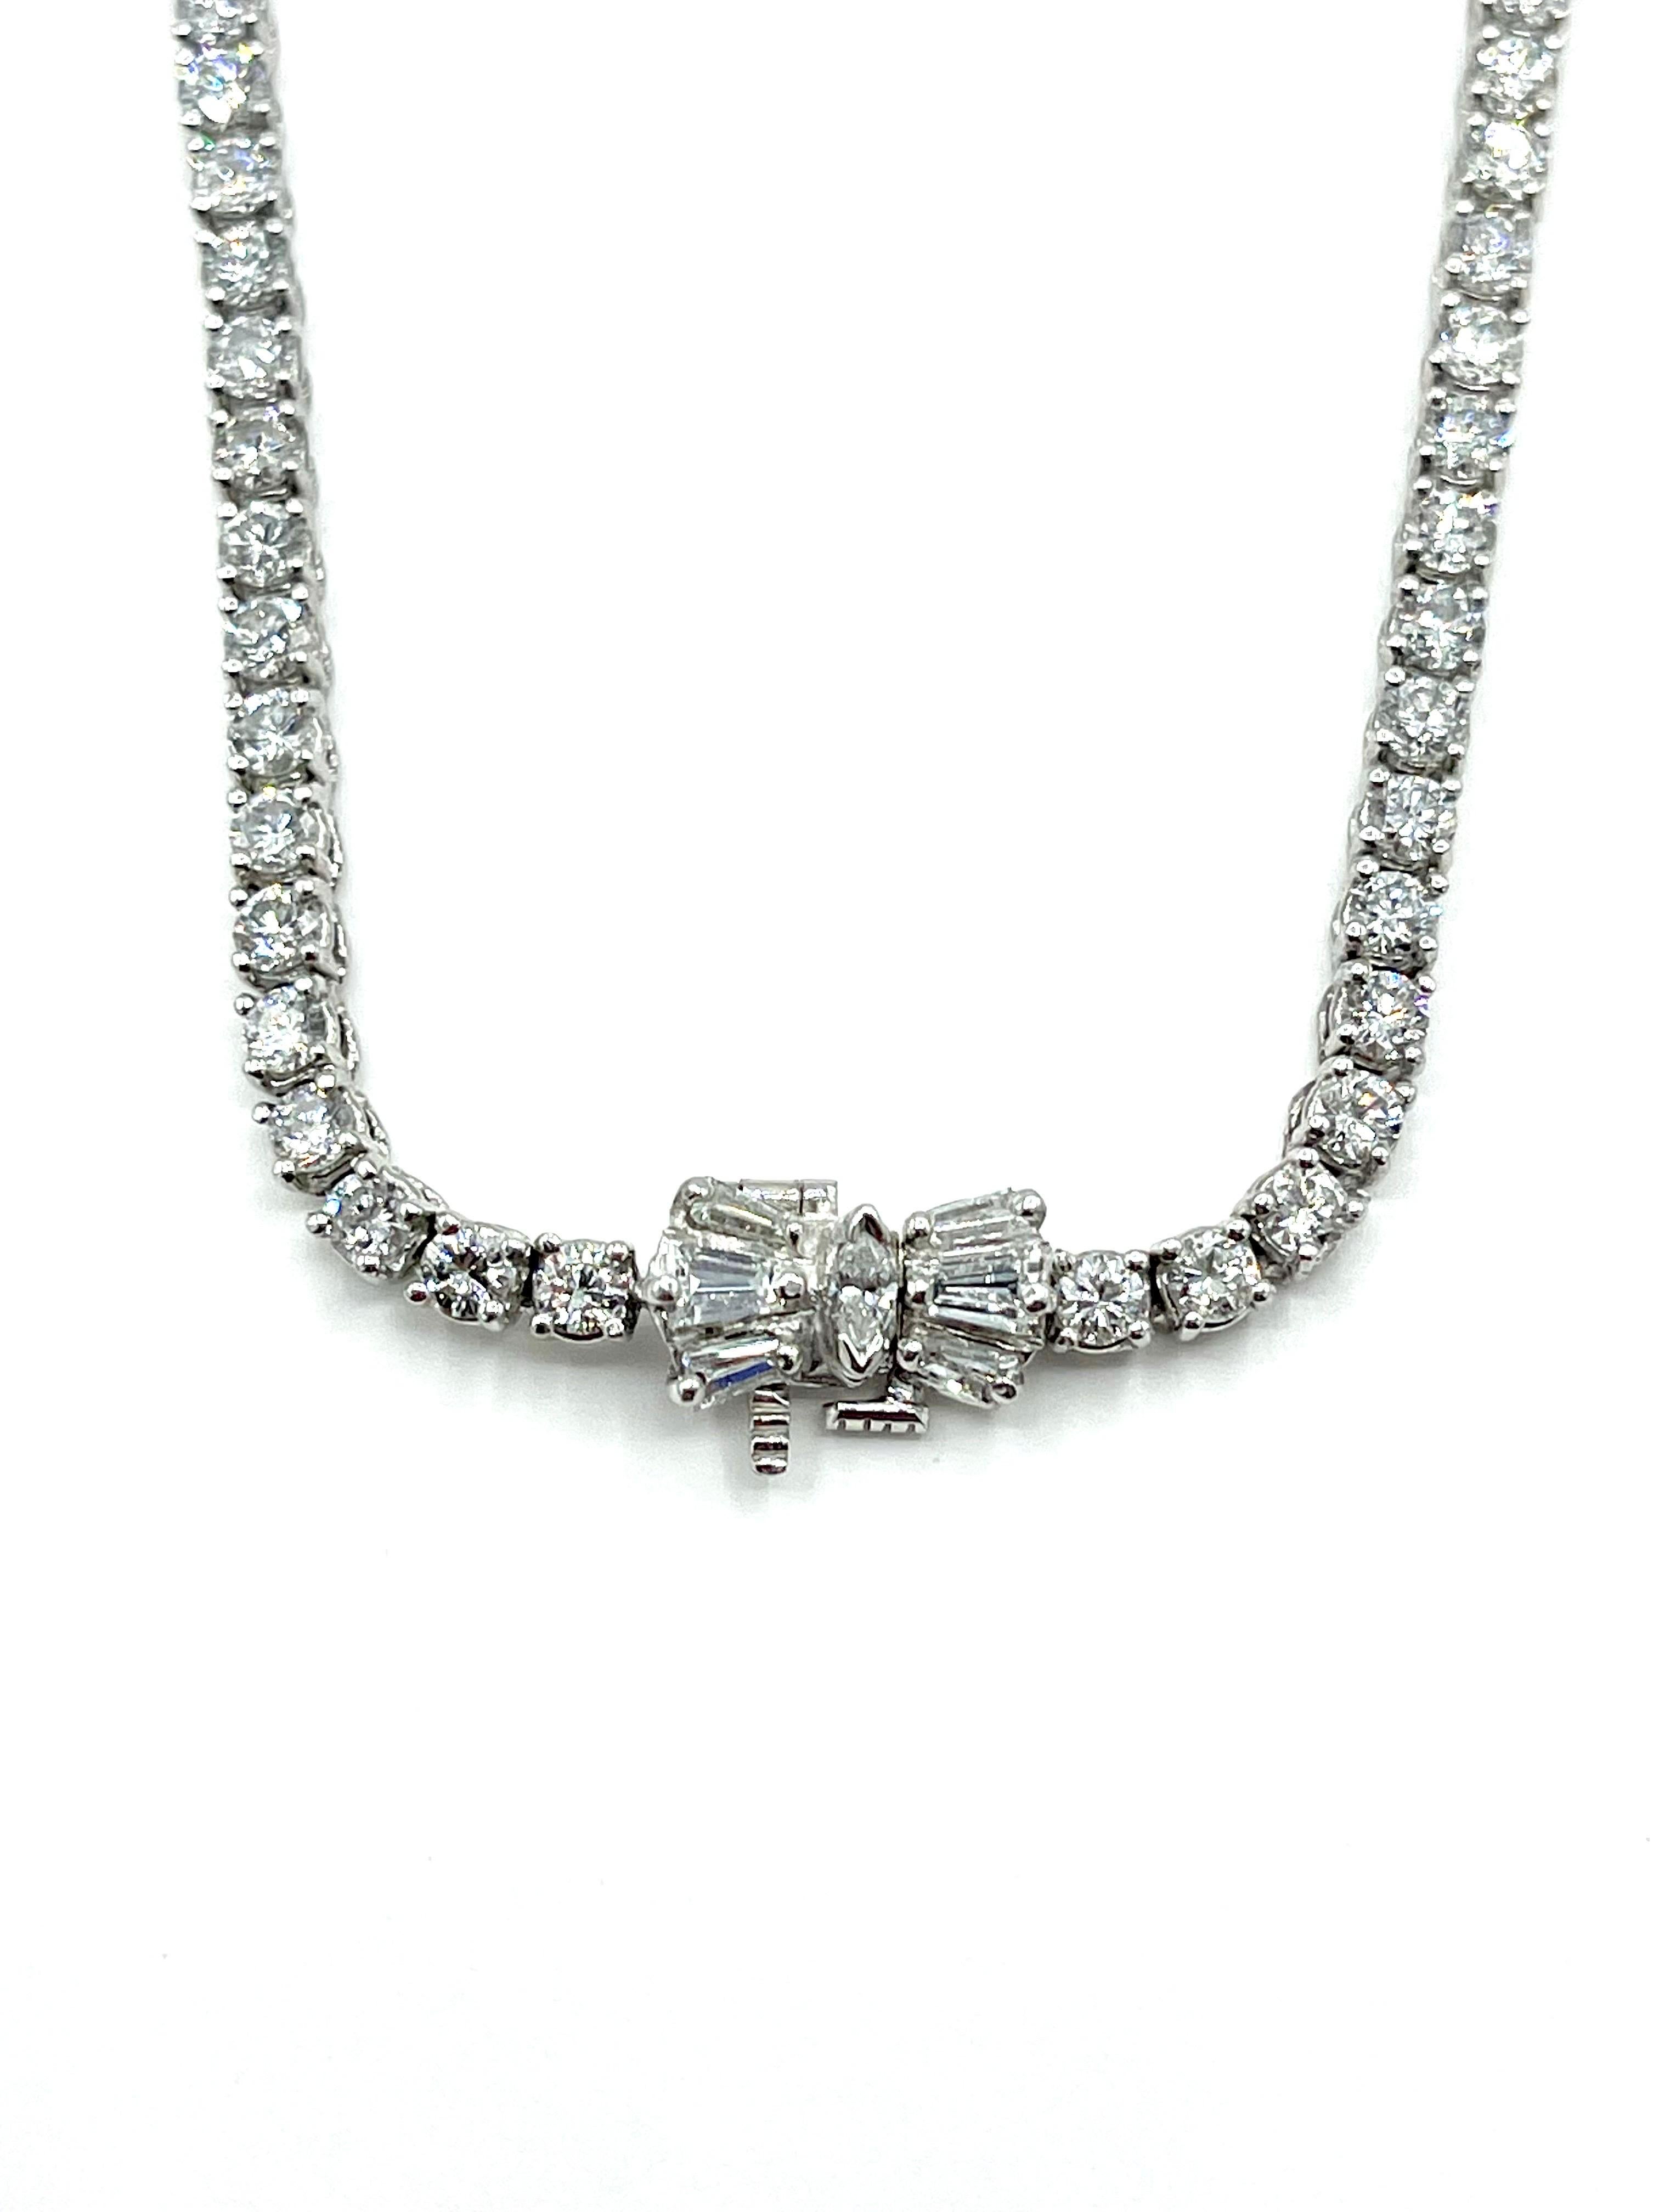 Round Cut 21.06 Carats Diamond Riviera Necklace in Platinum